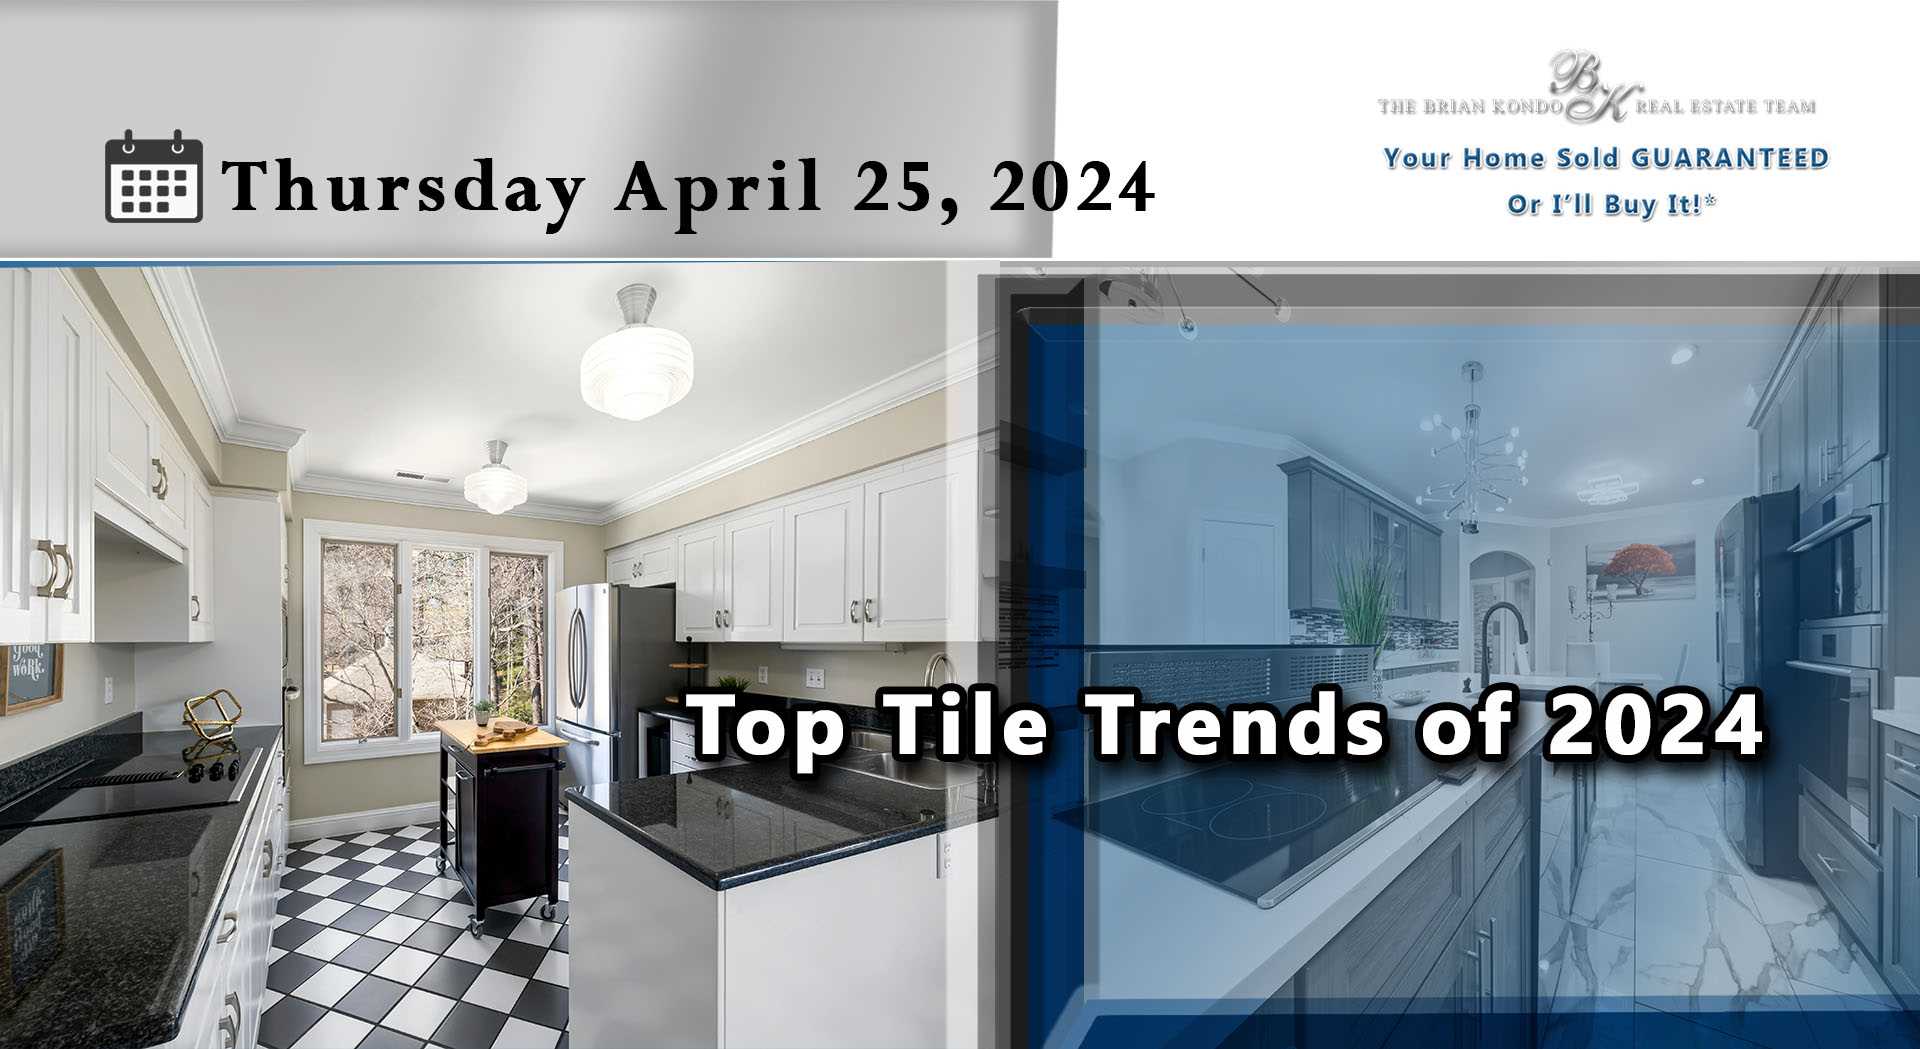 Top Tile Trends of 2024